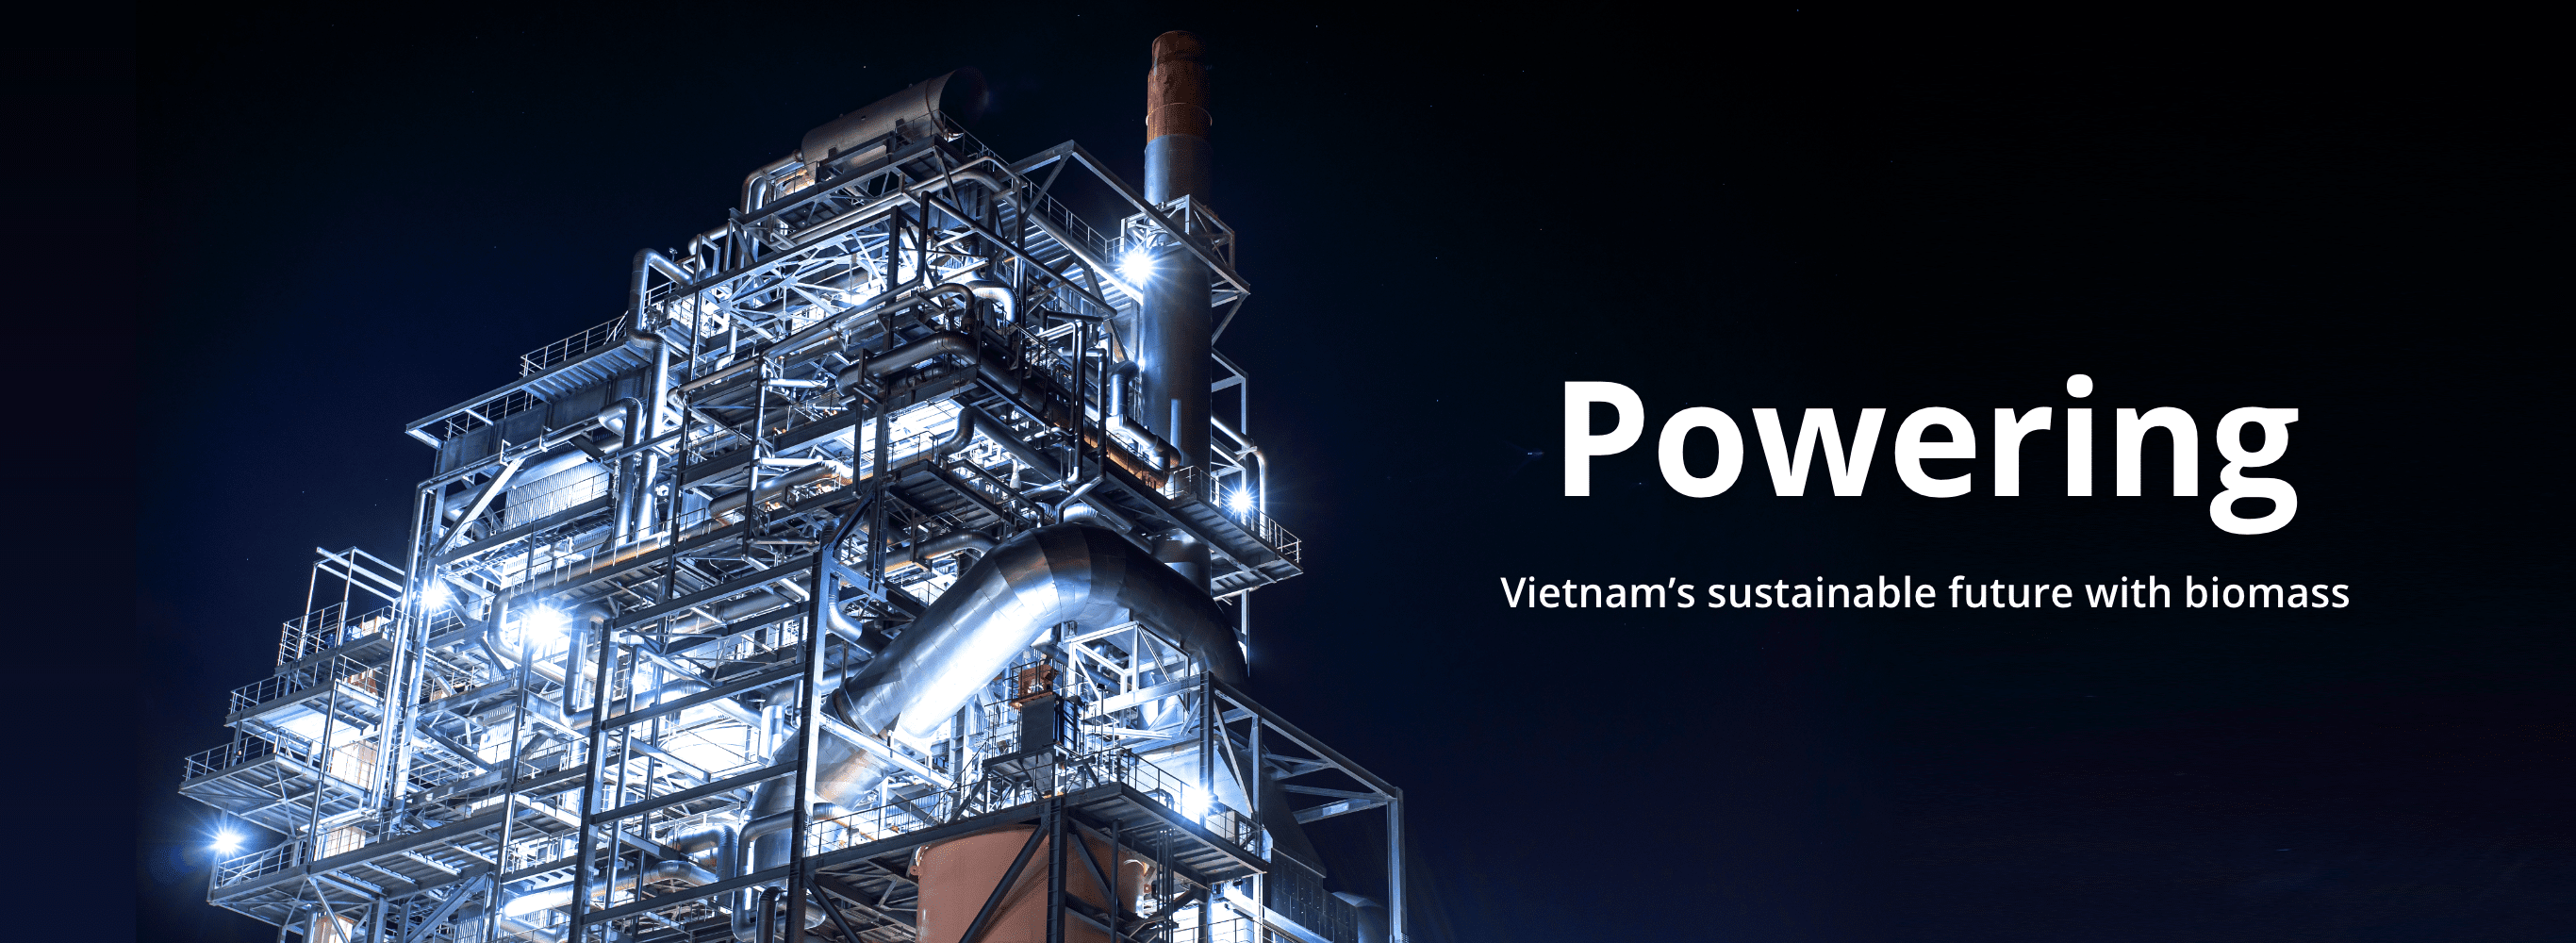 image:Powering​ Vietnam’s sustainable future with biomass